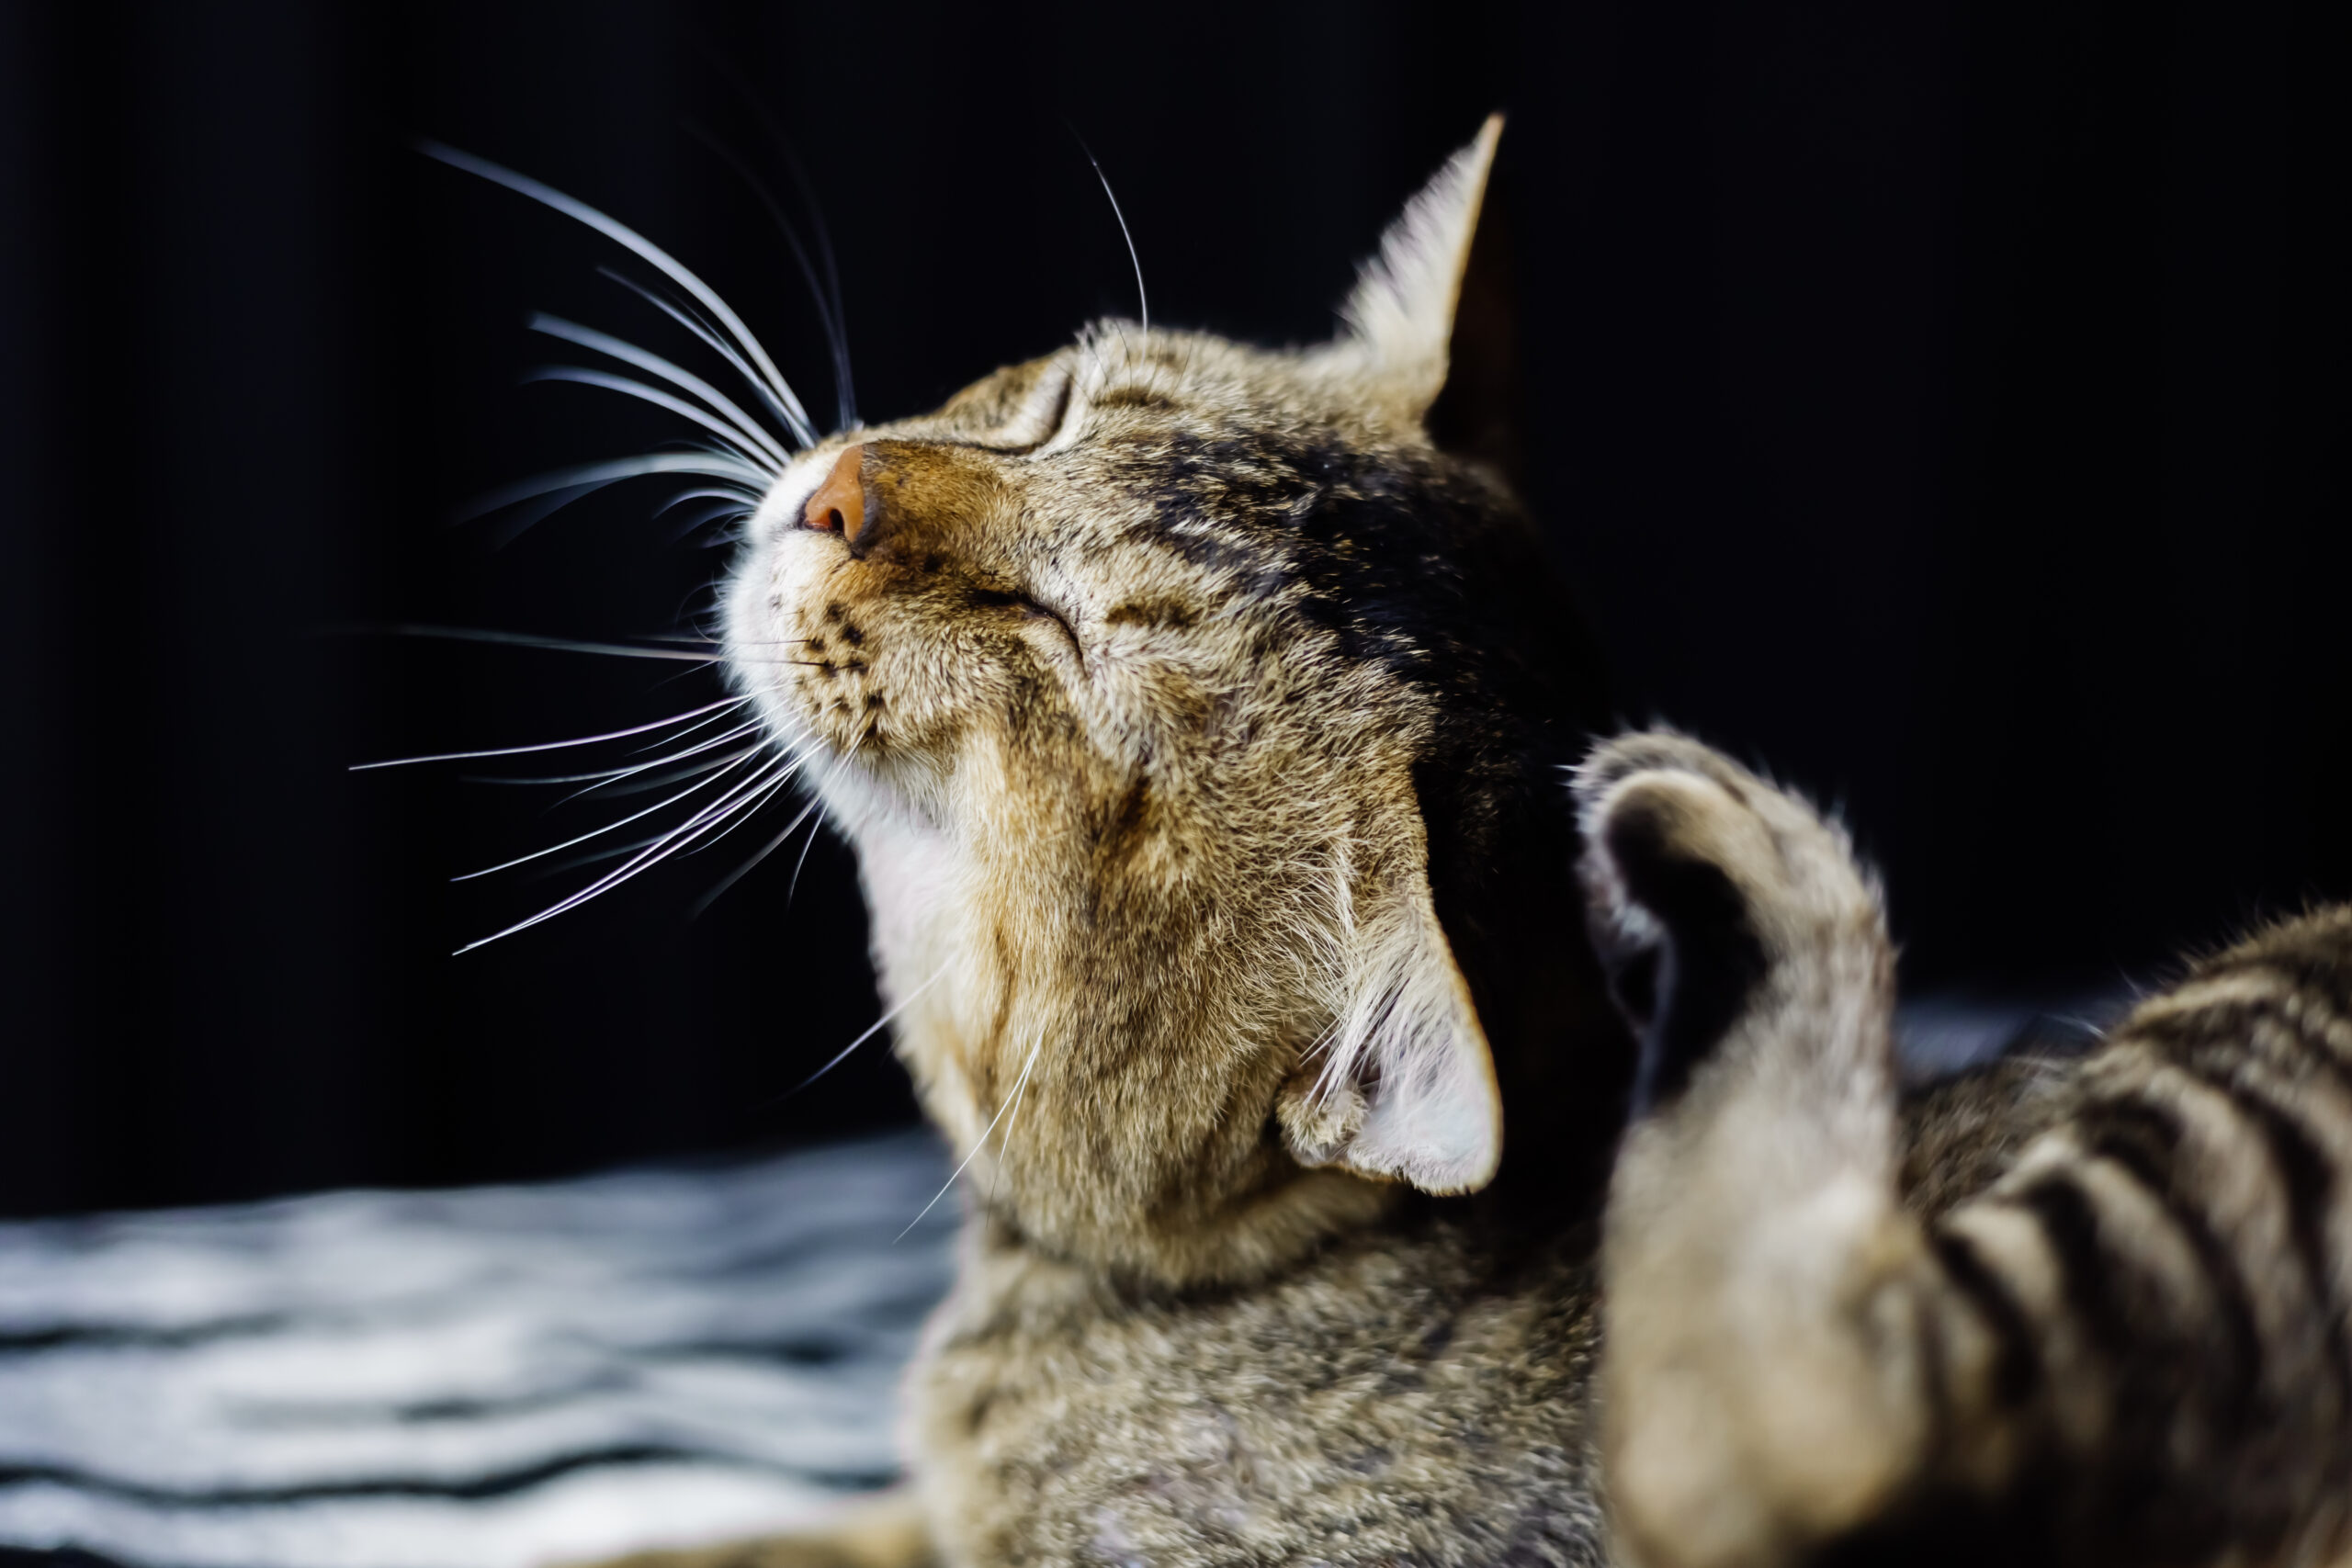 close-portrait-beautiful-stripped-cat-relaxing-zebra-blanket-scratching-ears